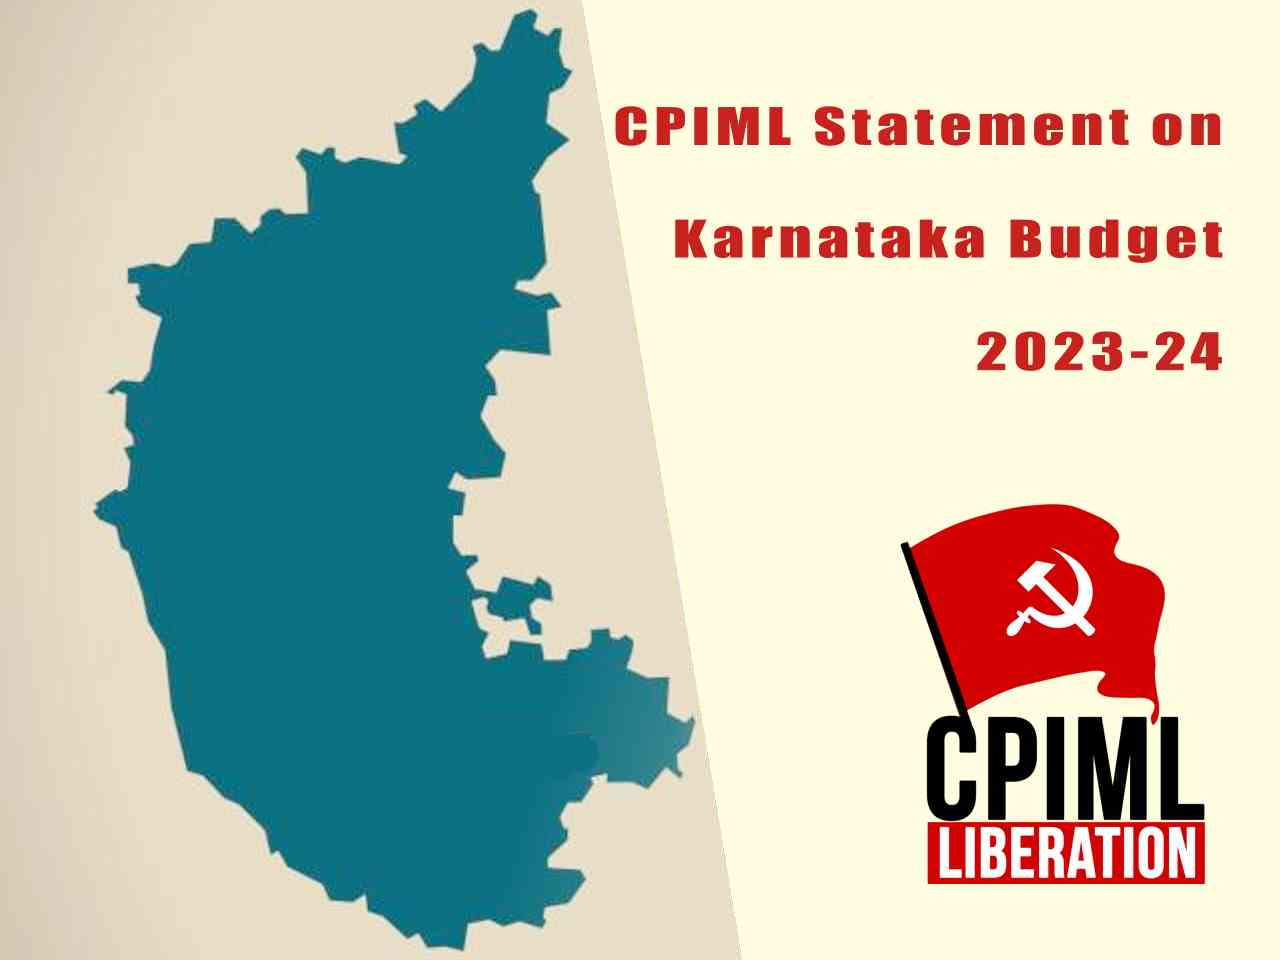 CPIML Statement on Karnataka Budget 2023